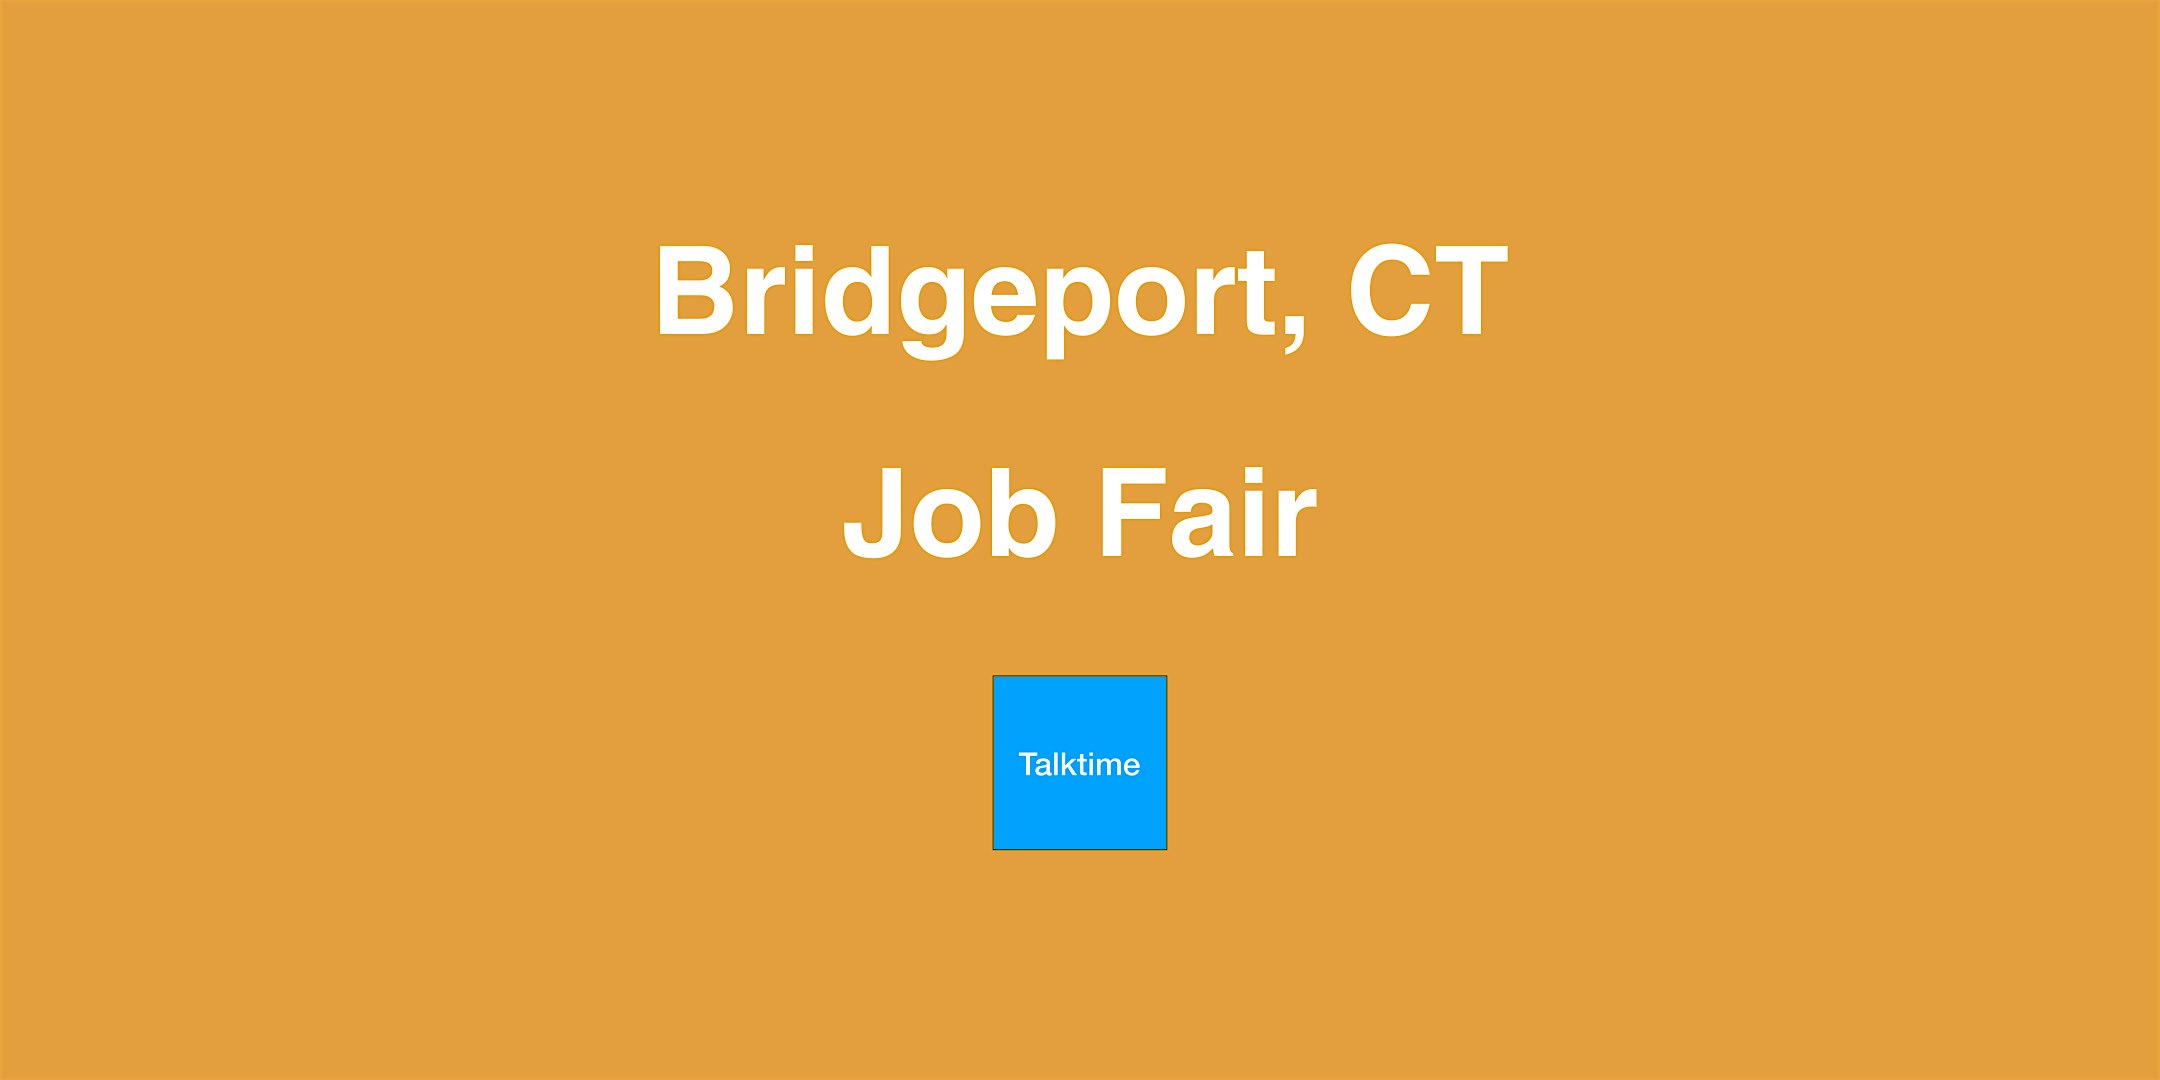 Job Fair - Bridgeport